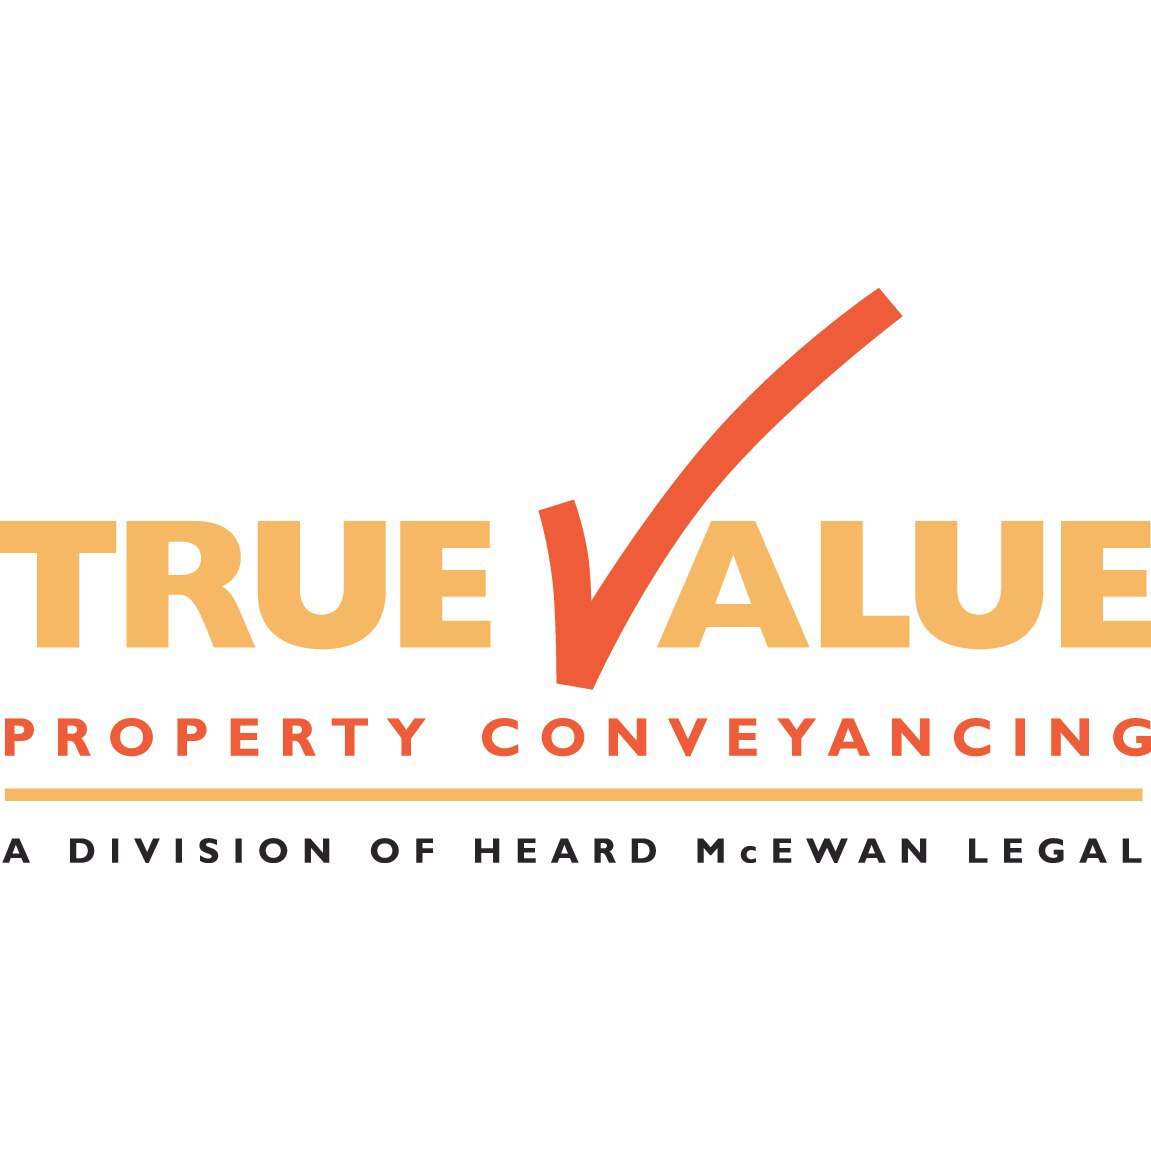 True Value Property Conveyancing - Warilla, NSW 2528 - (02) 4254 5200 | ShowMeLocal.com